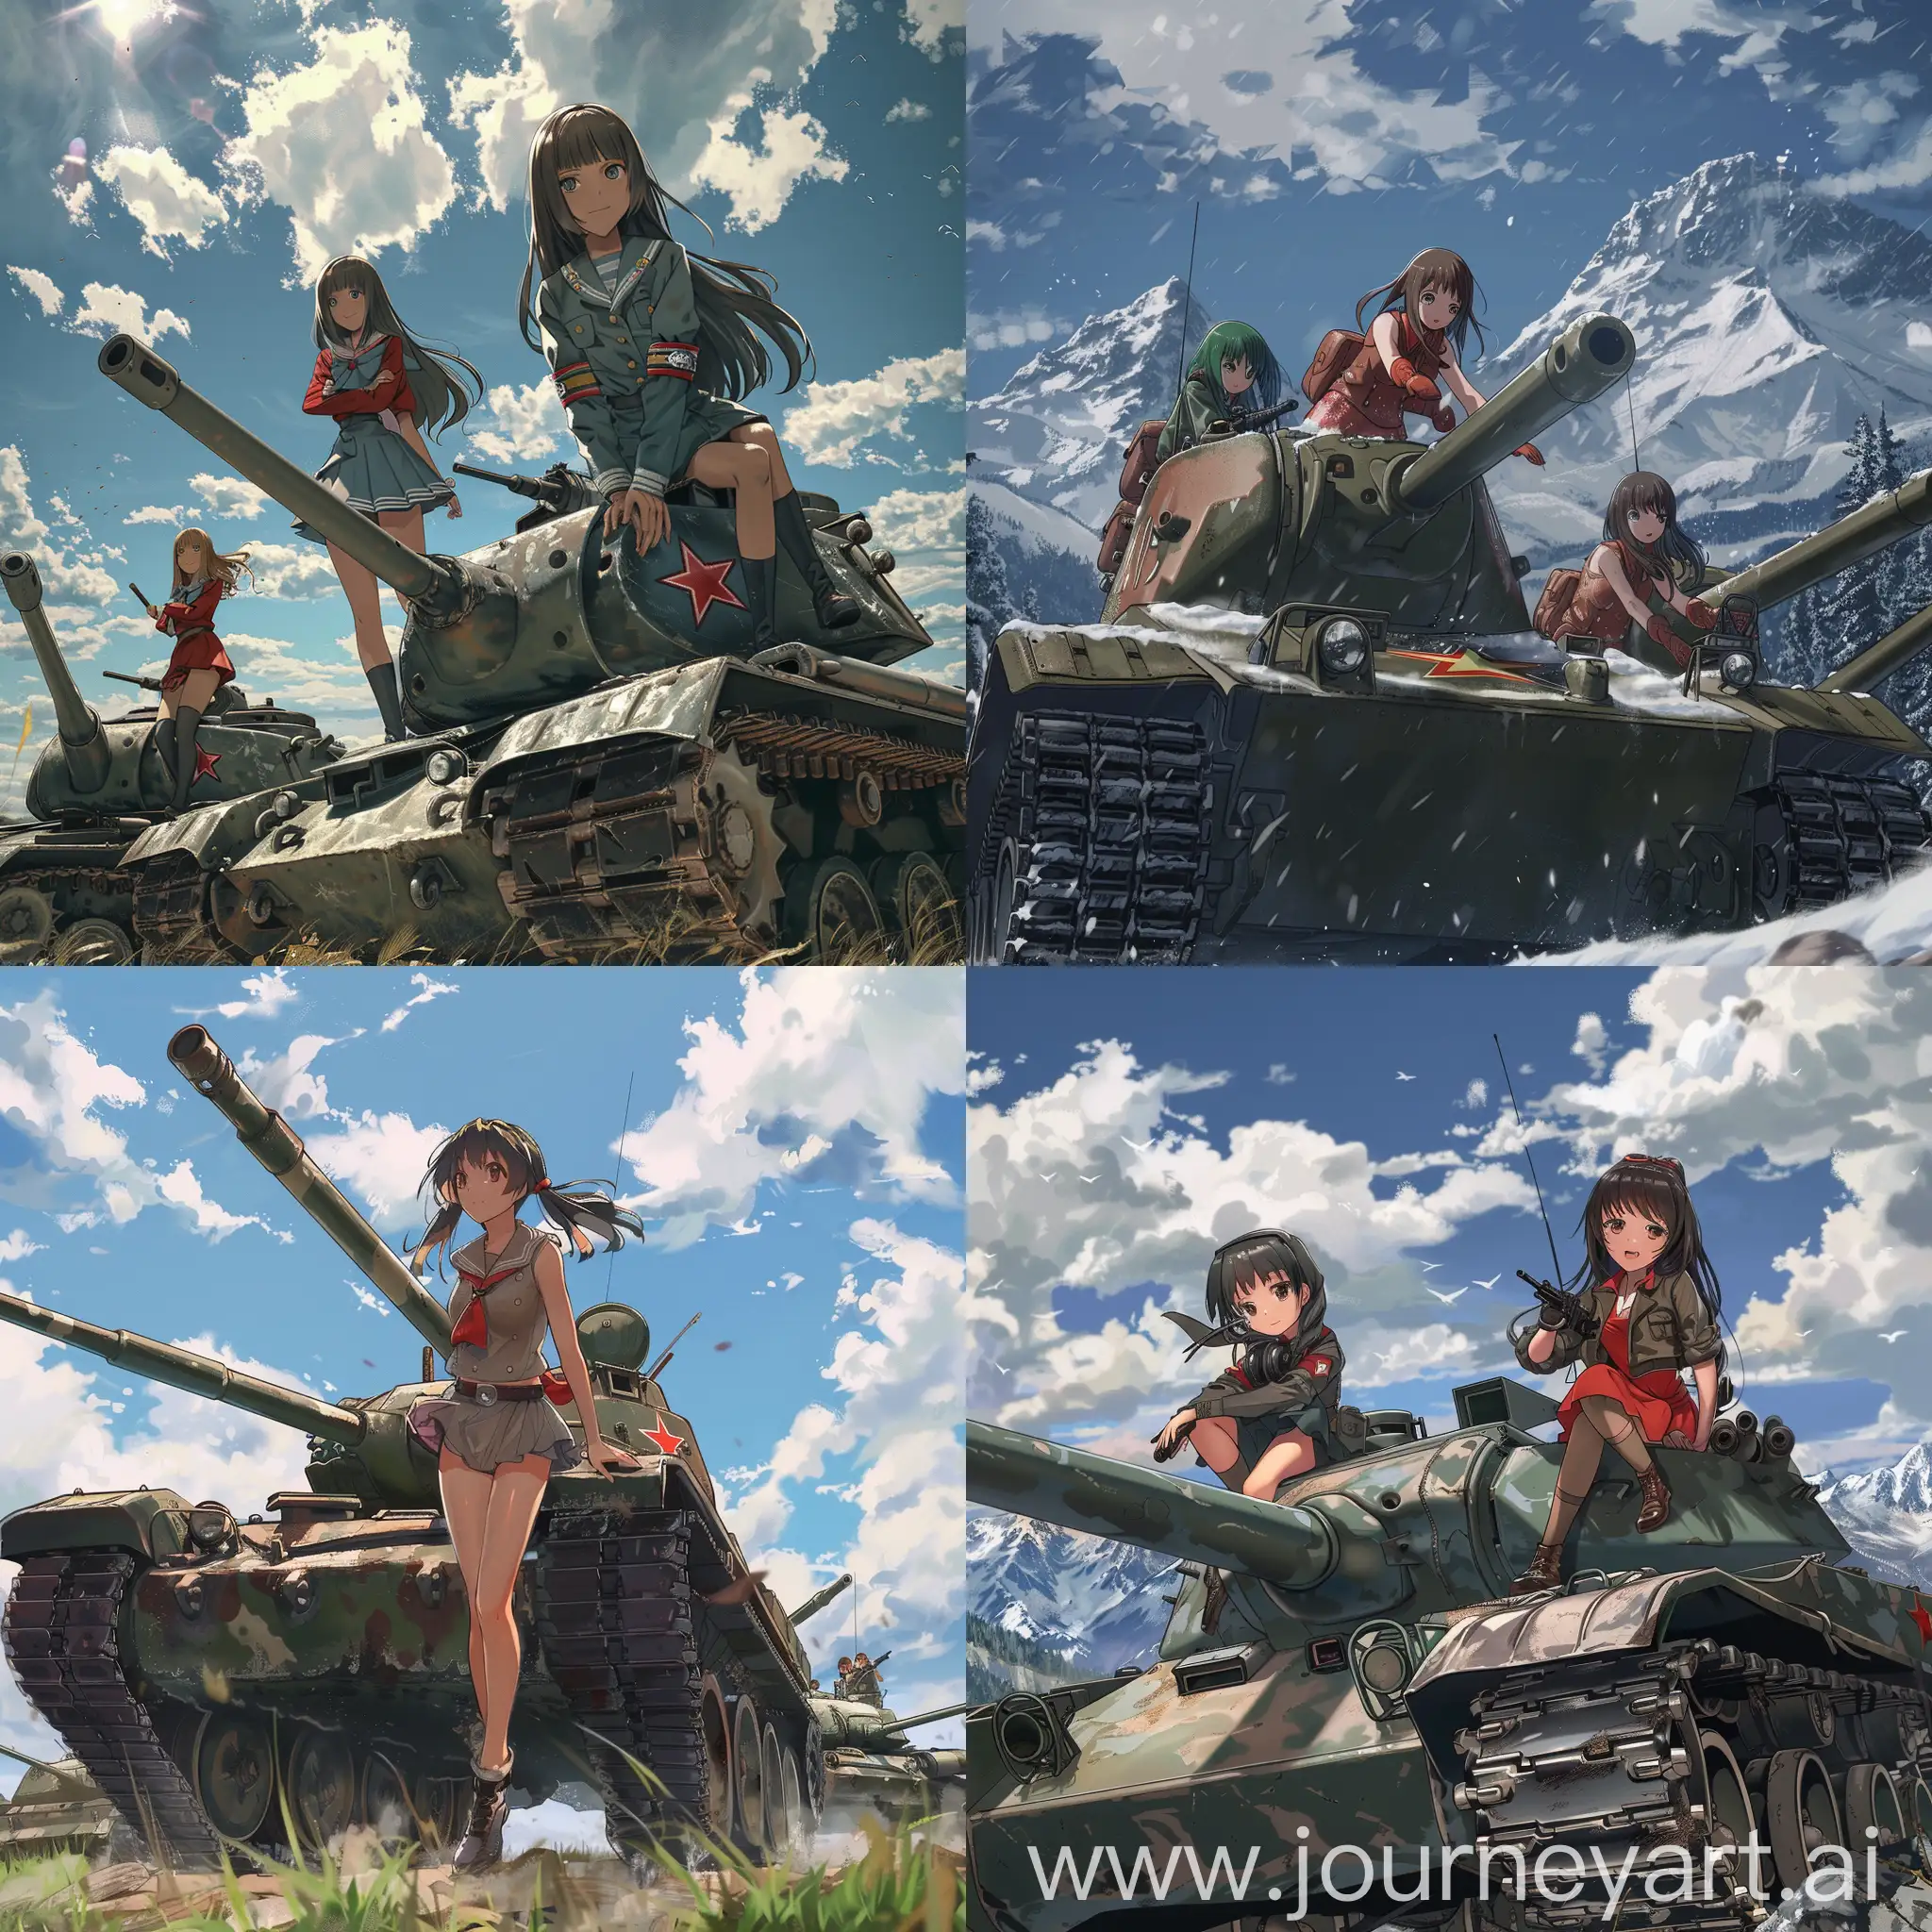 Anime-Girls-Riding-Soviet-Tanks-Fantasy-Illustration-Artwork